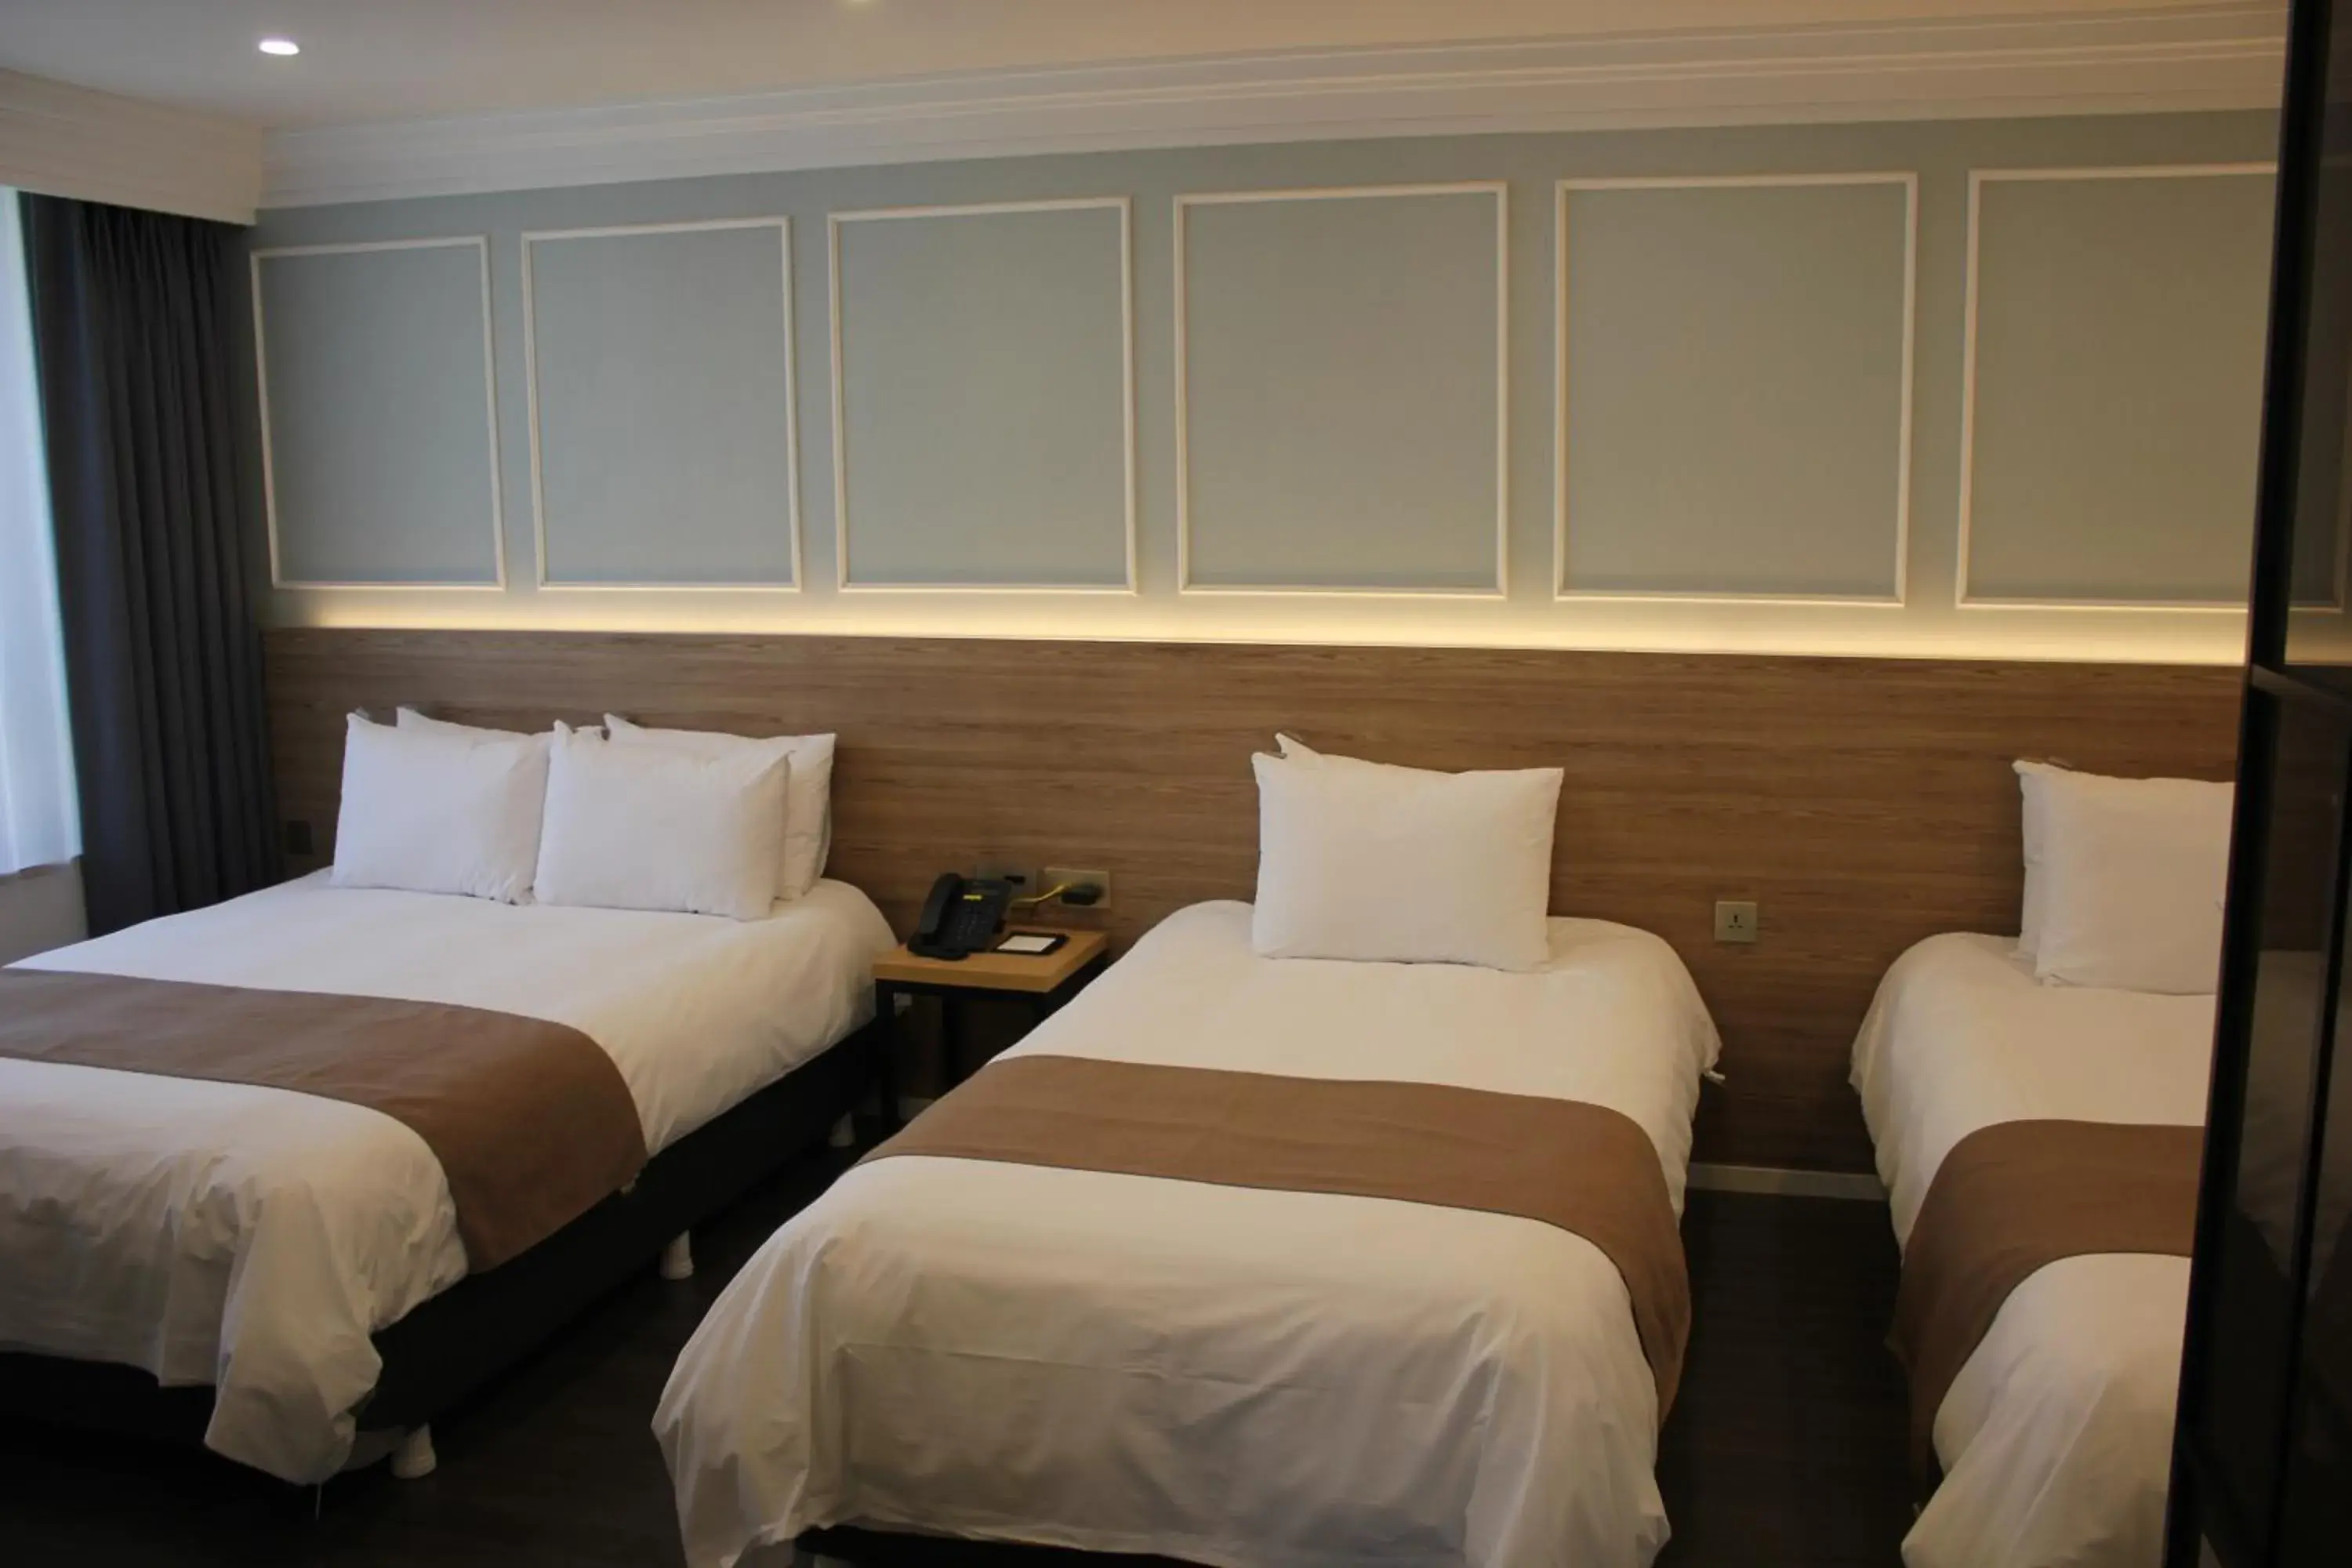 Bed in Casaloma hotel